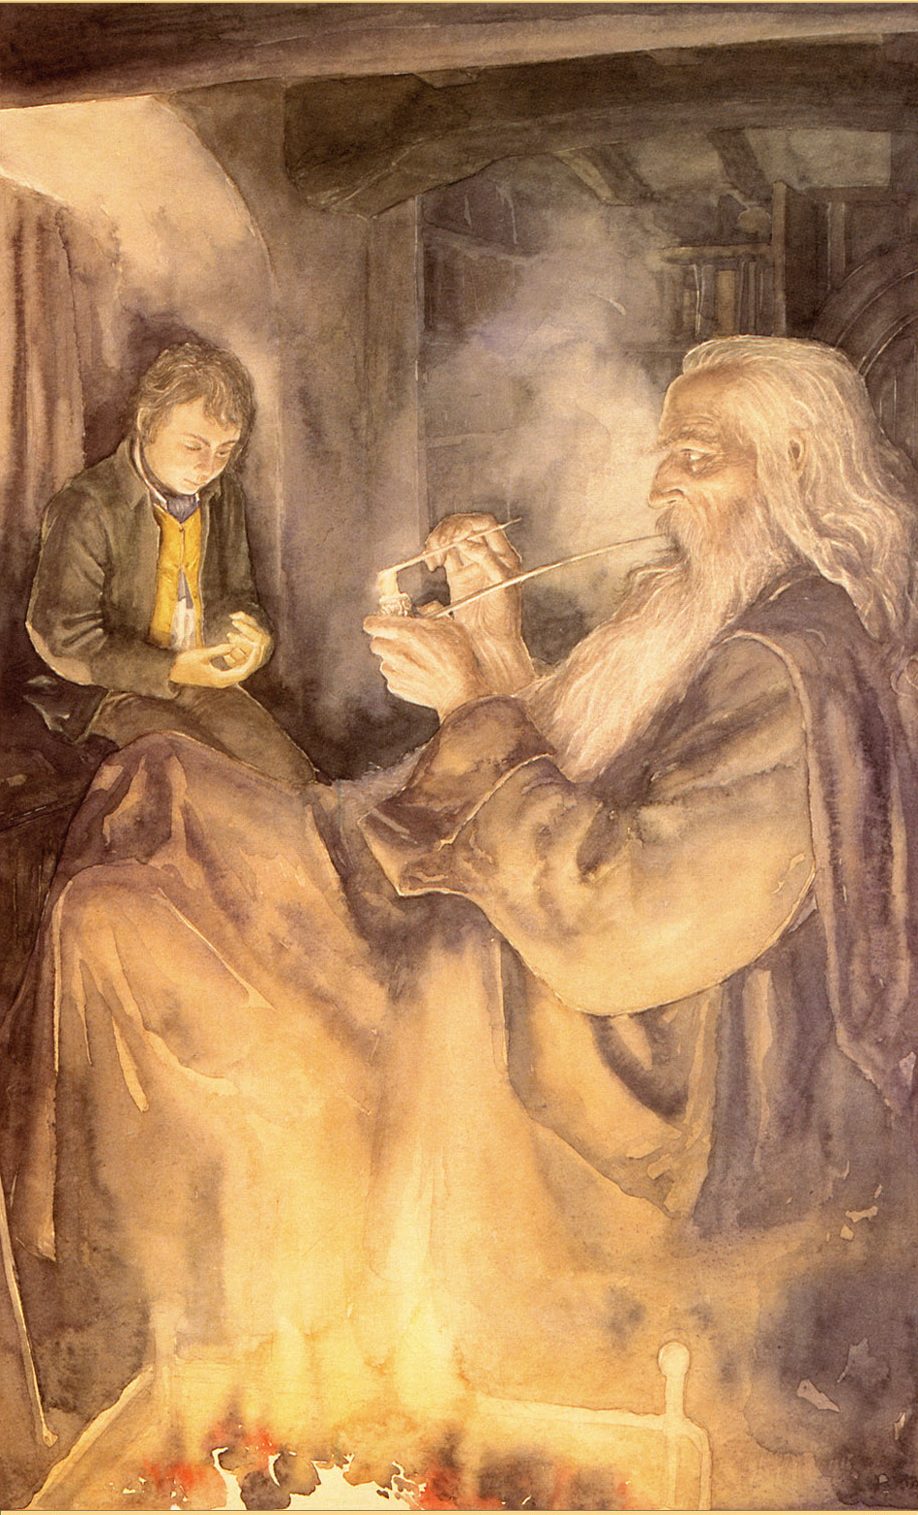 Alan Lee, Frodo and Gandalf, acquarello